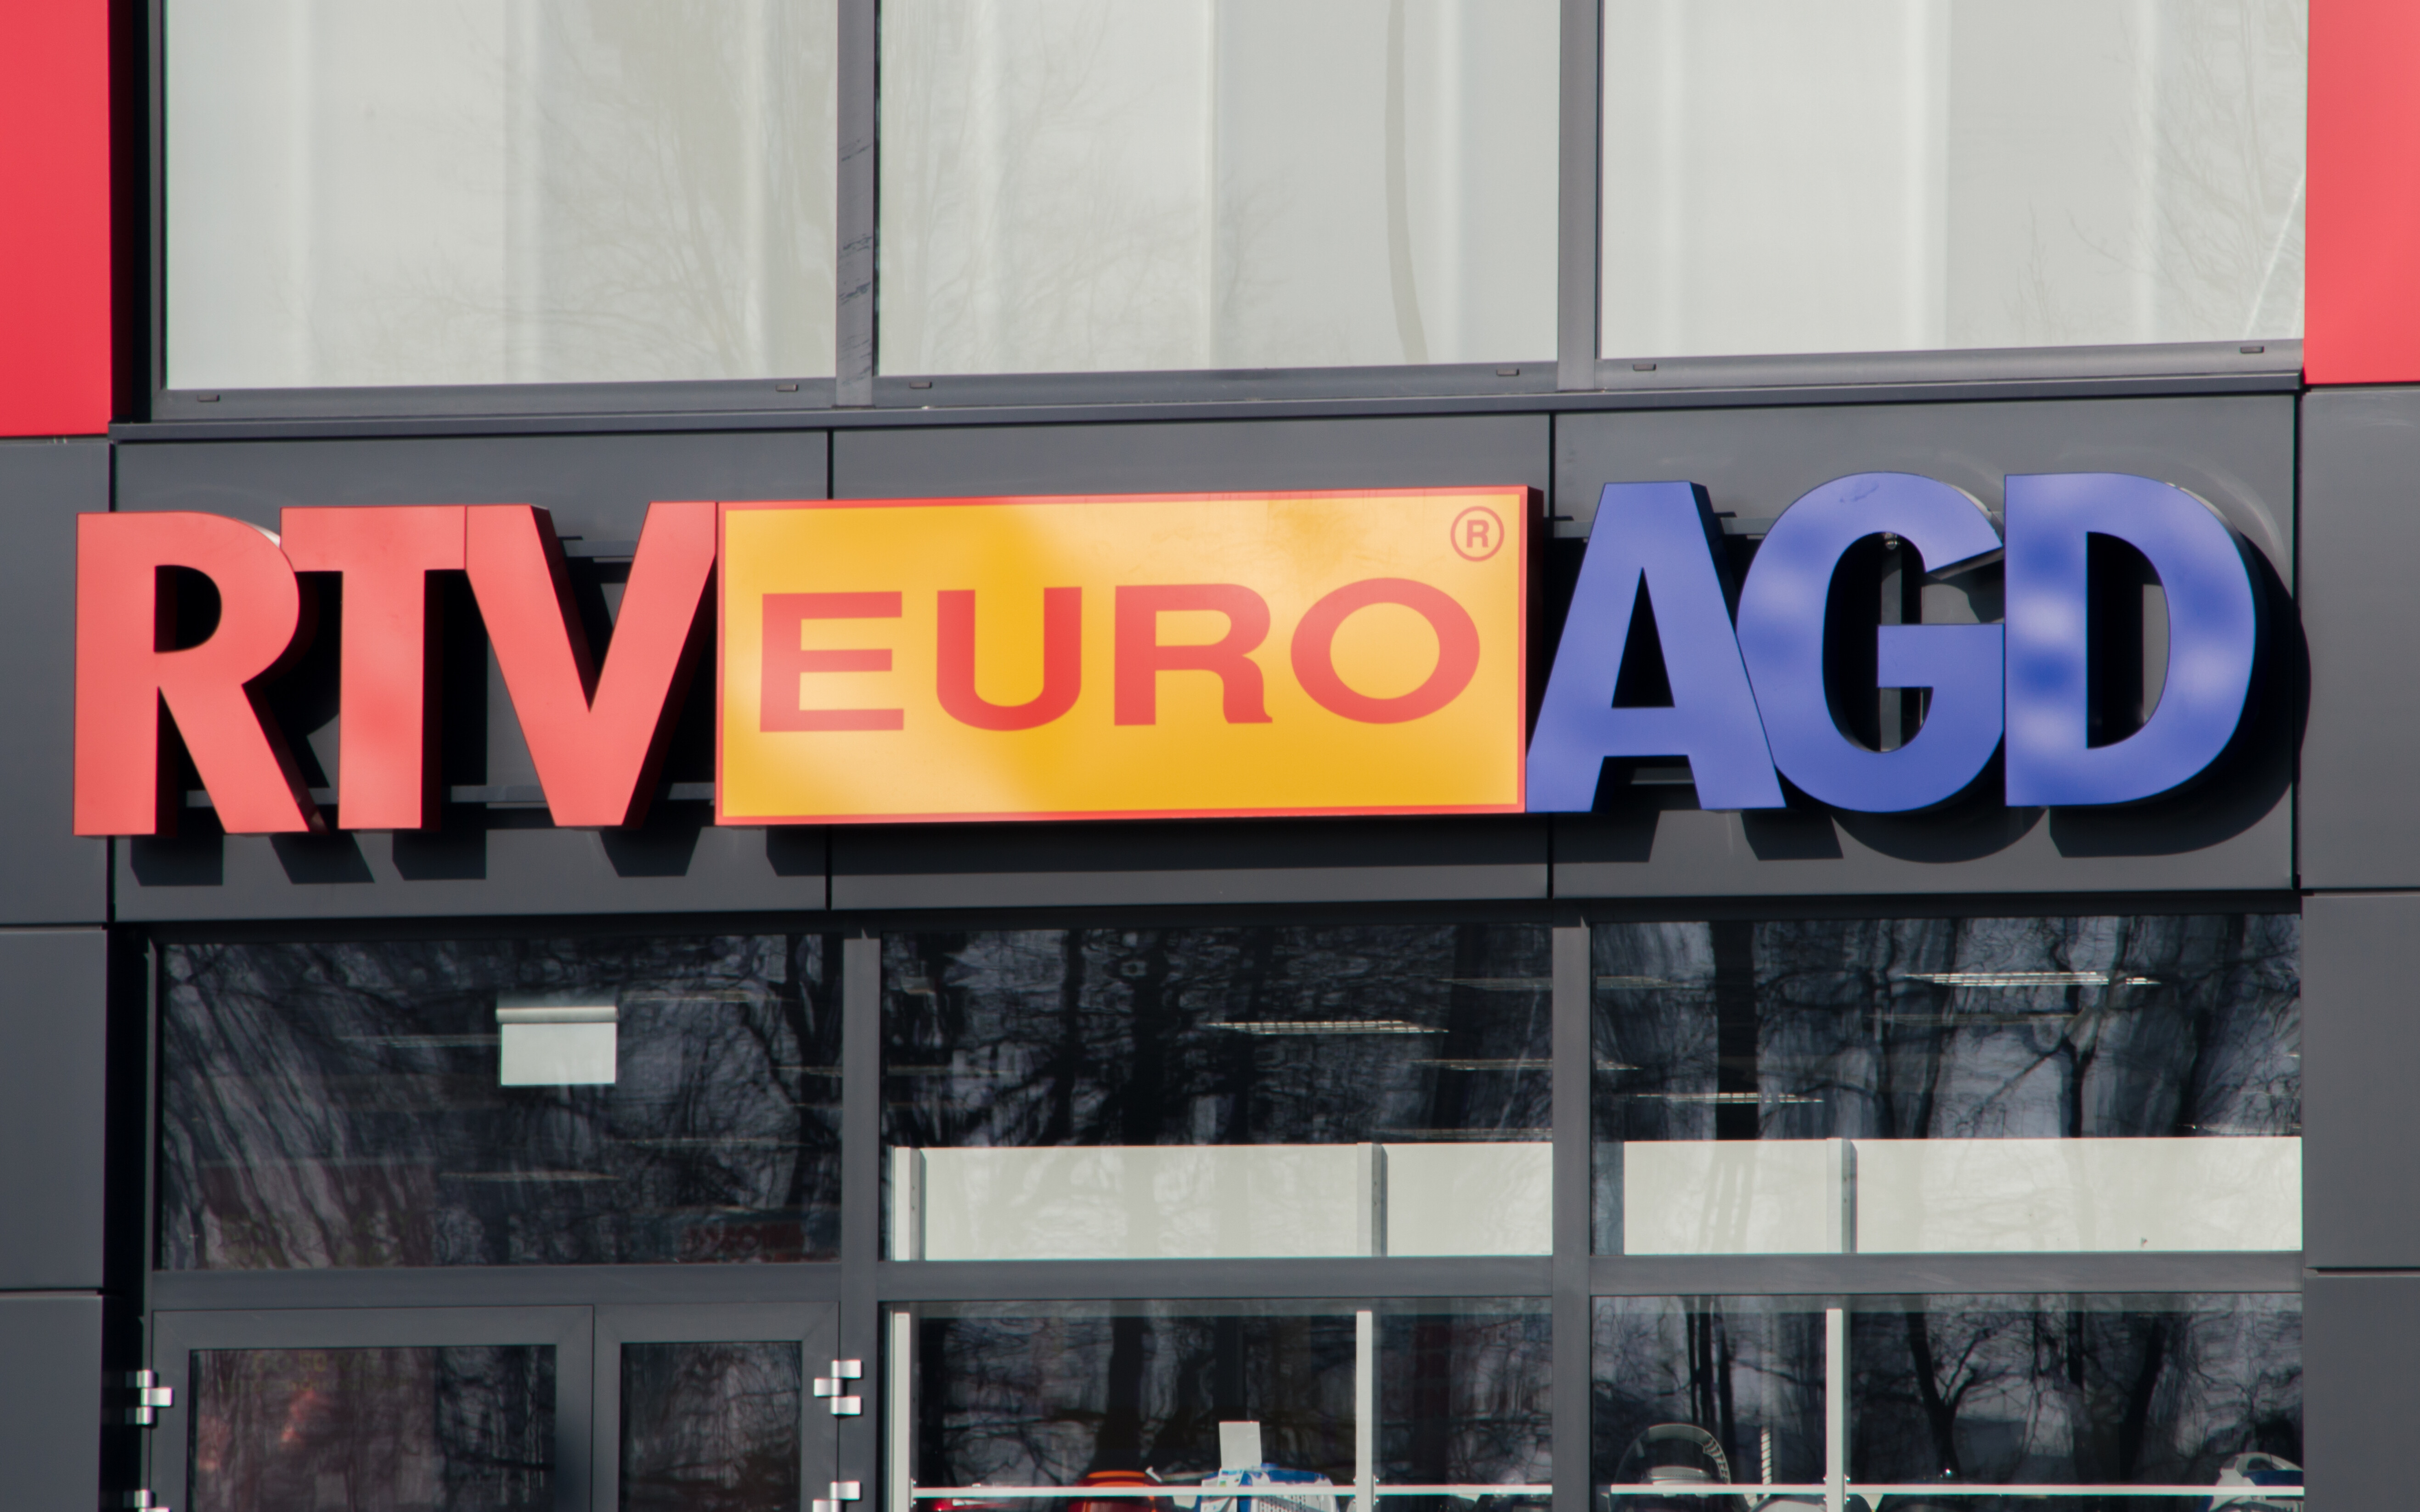 RTV Euro AGD promocja soundbar